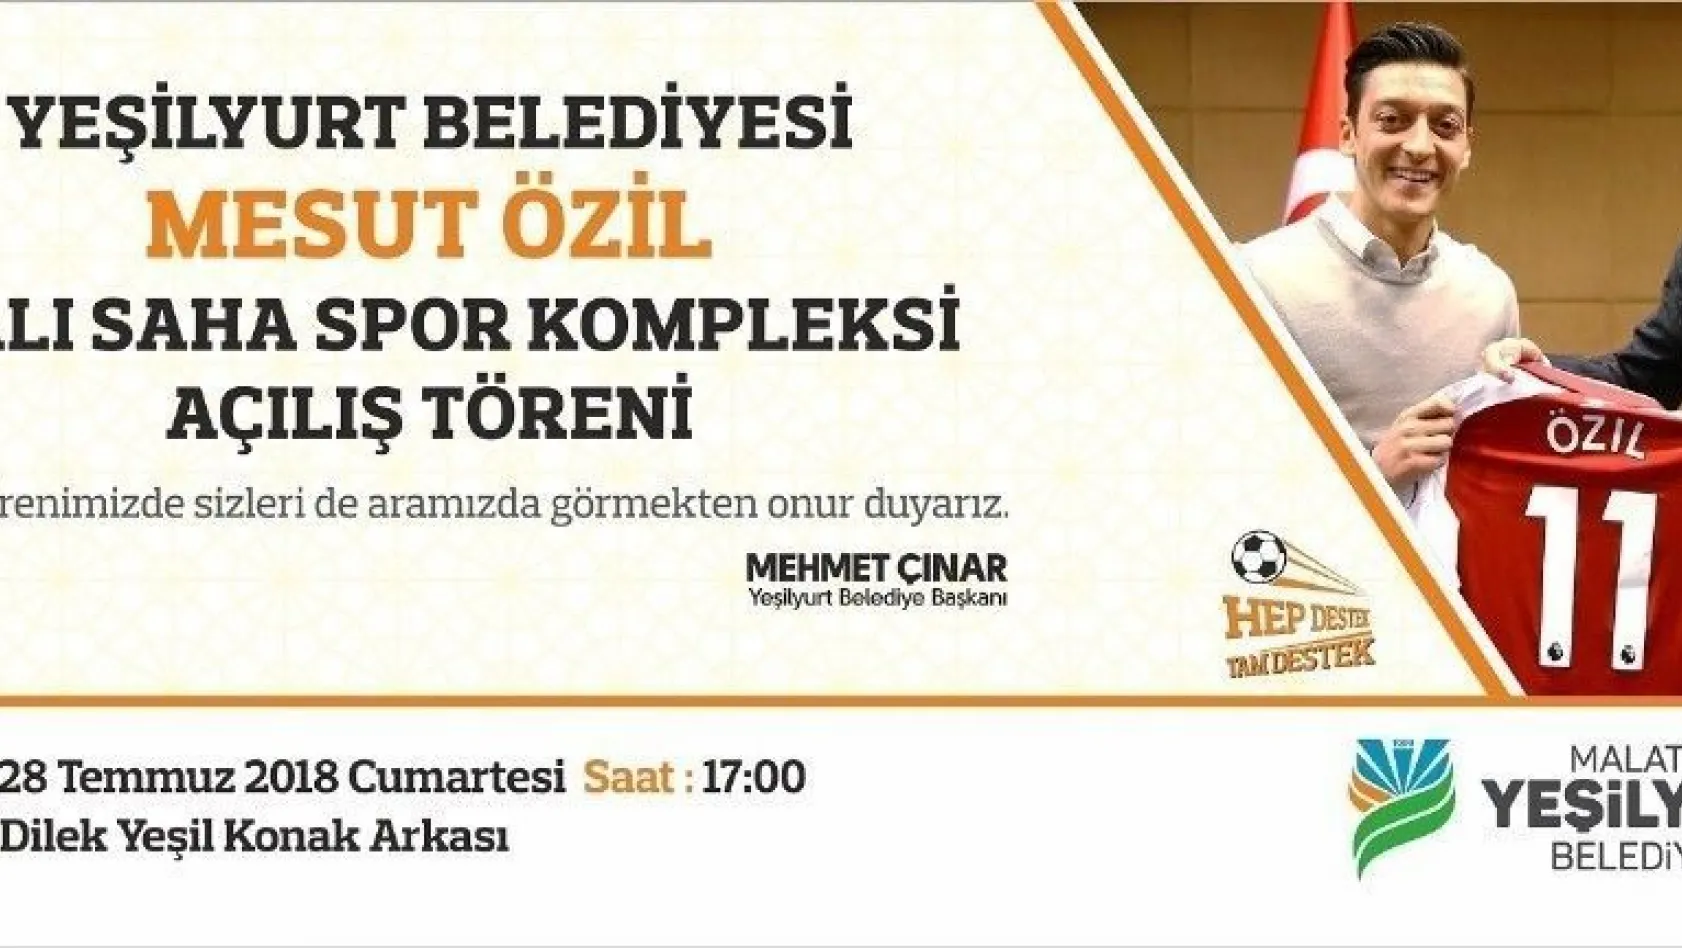 Malatya'dan Mesut Özil'e büyük jest
